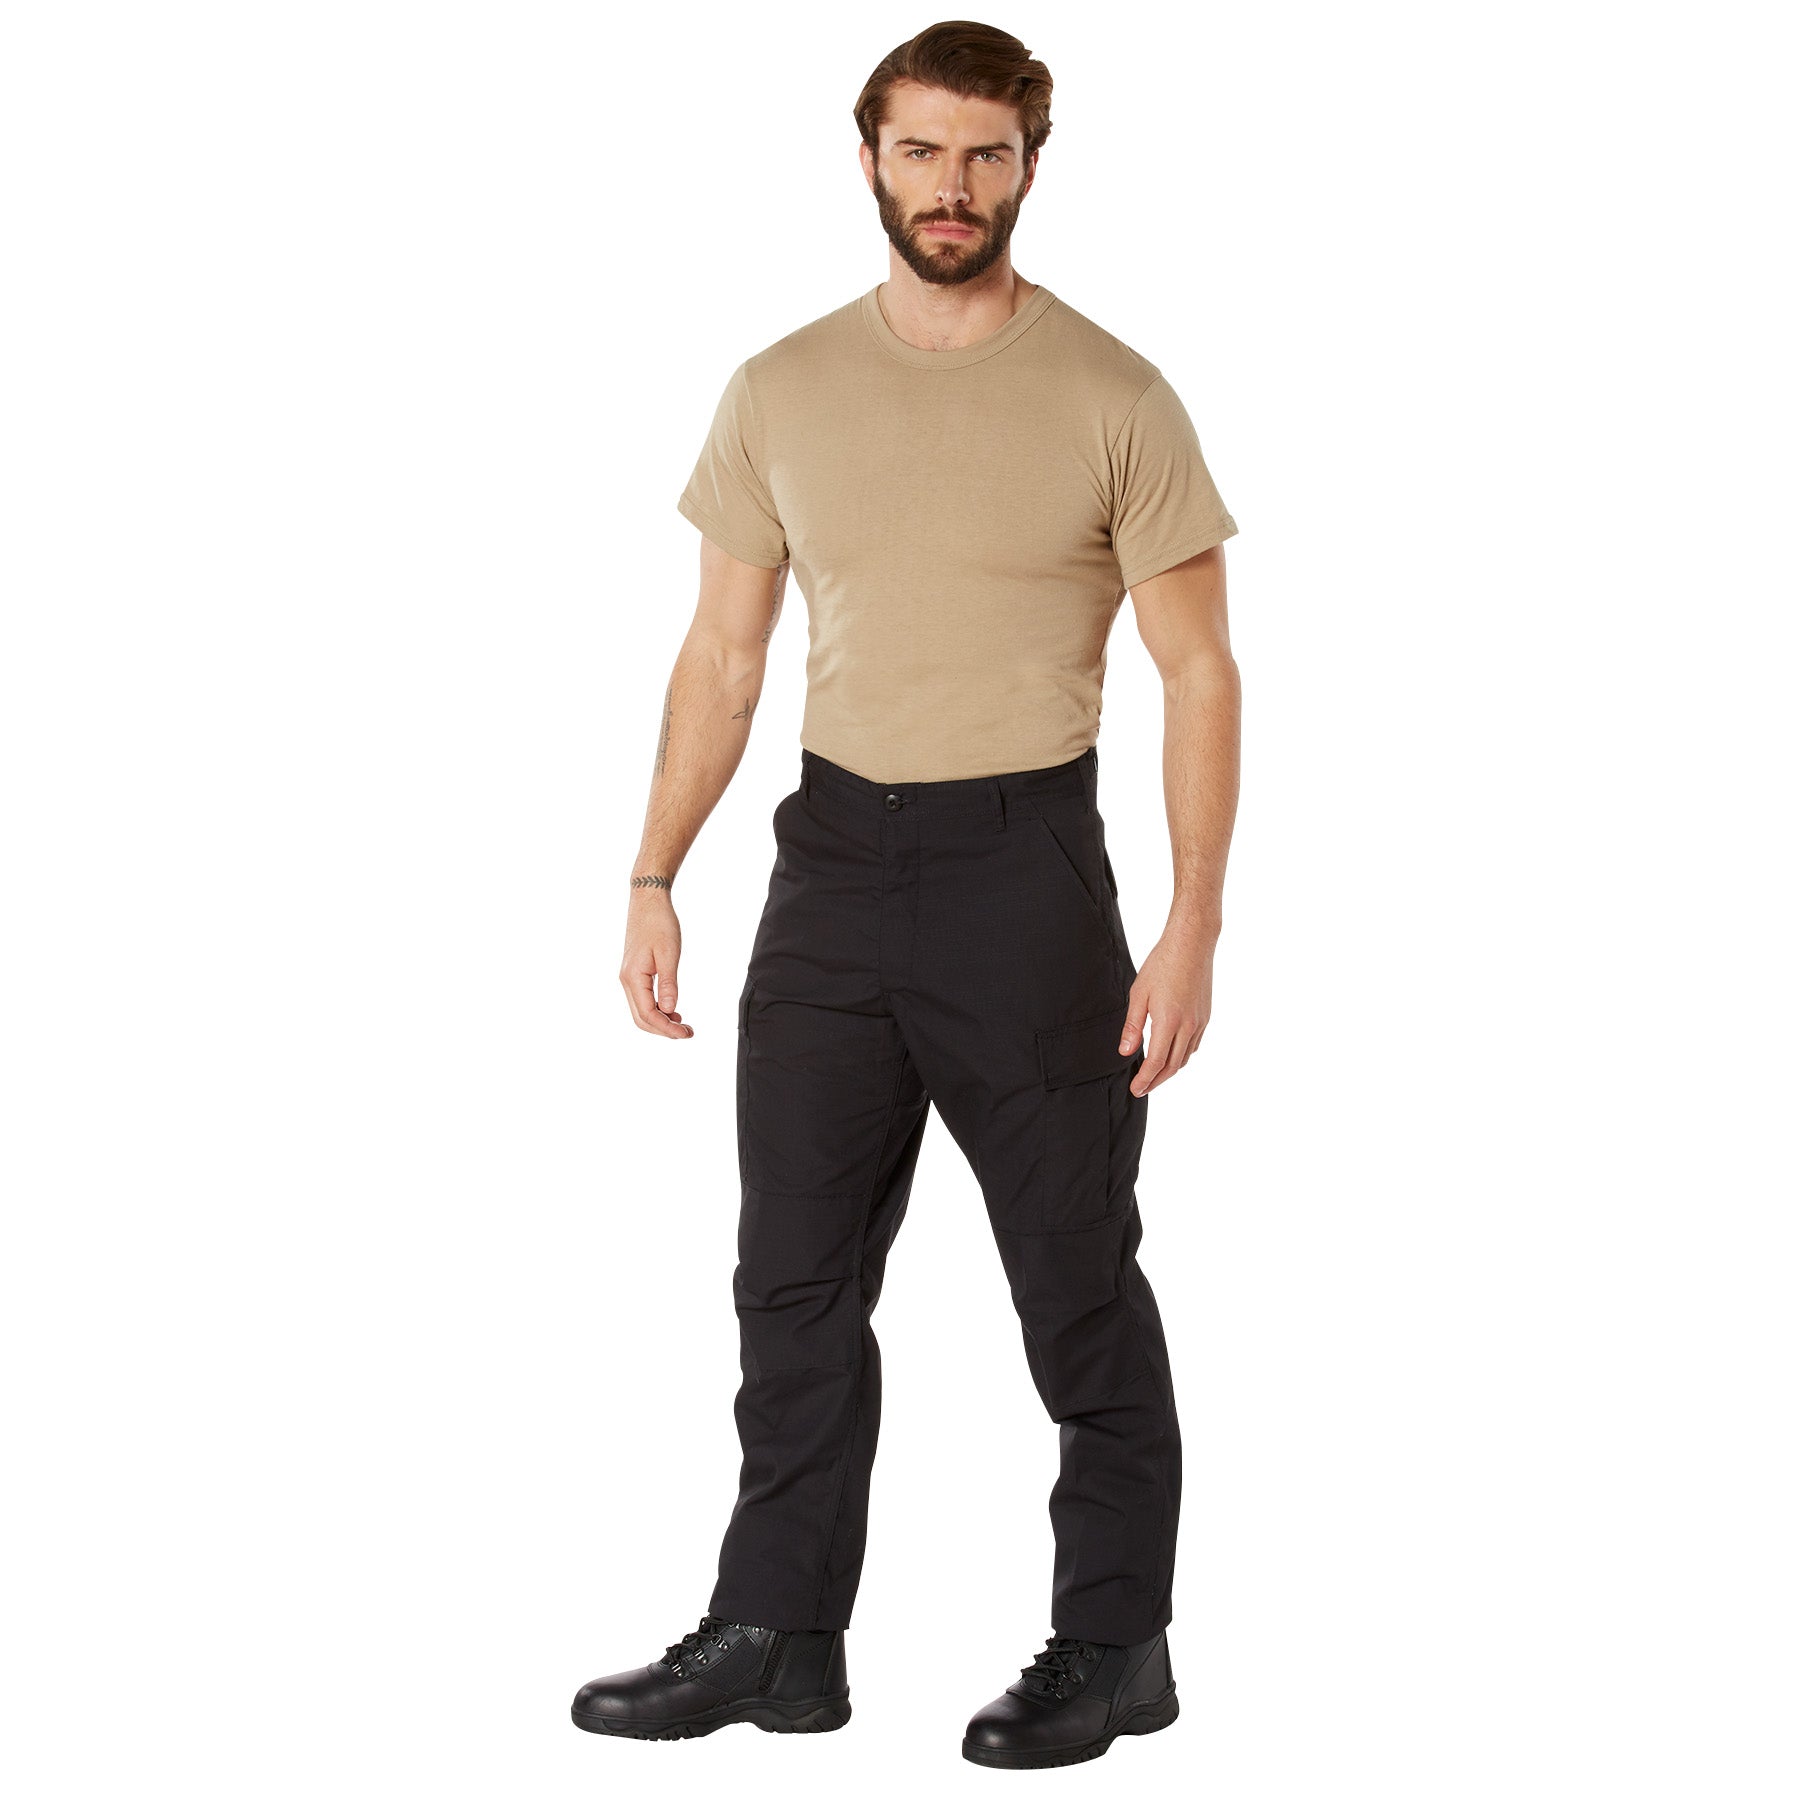 [SWAT] Poly/Cotton Rip-Stop Tactical BDU Pants Black